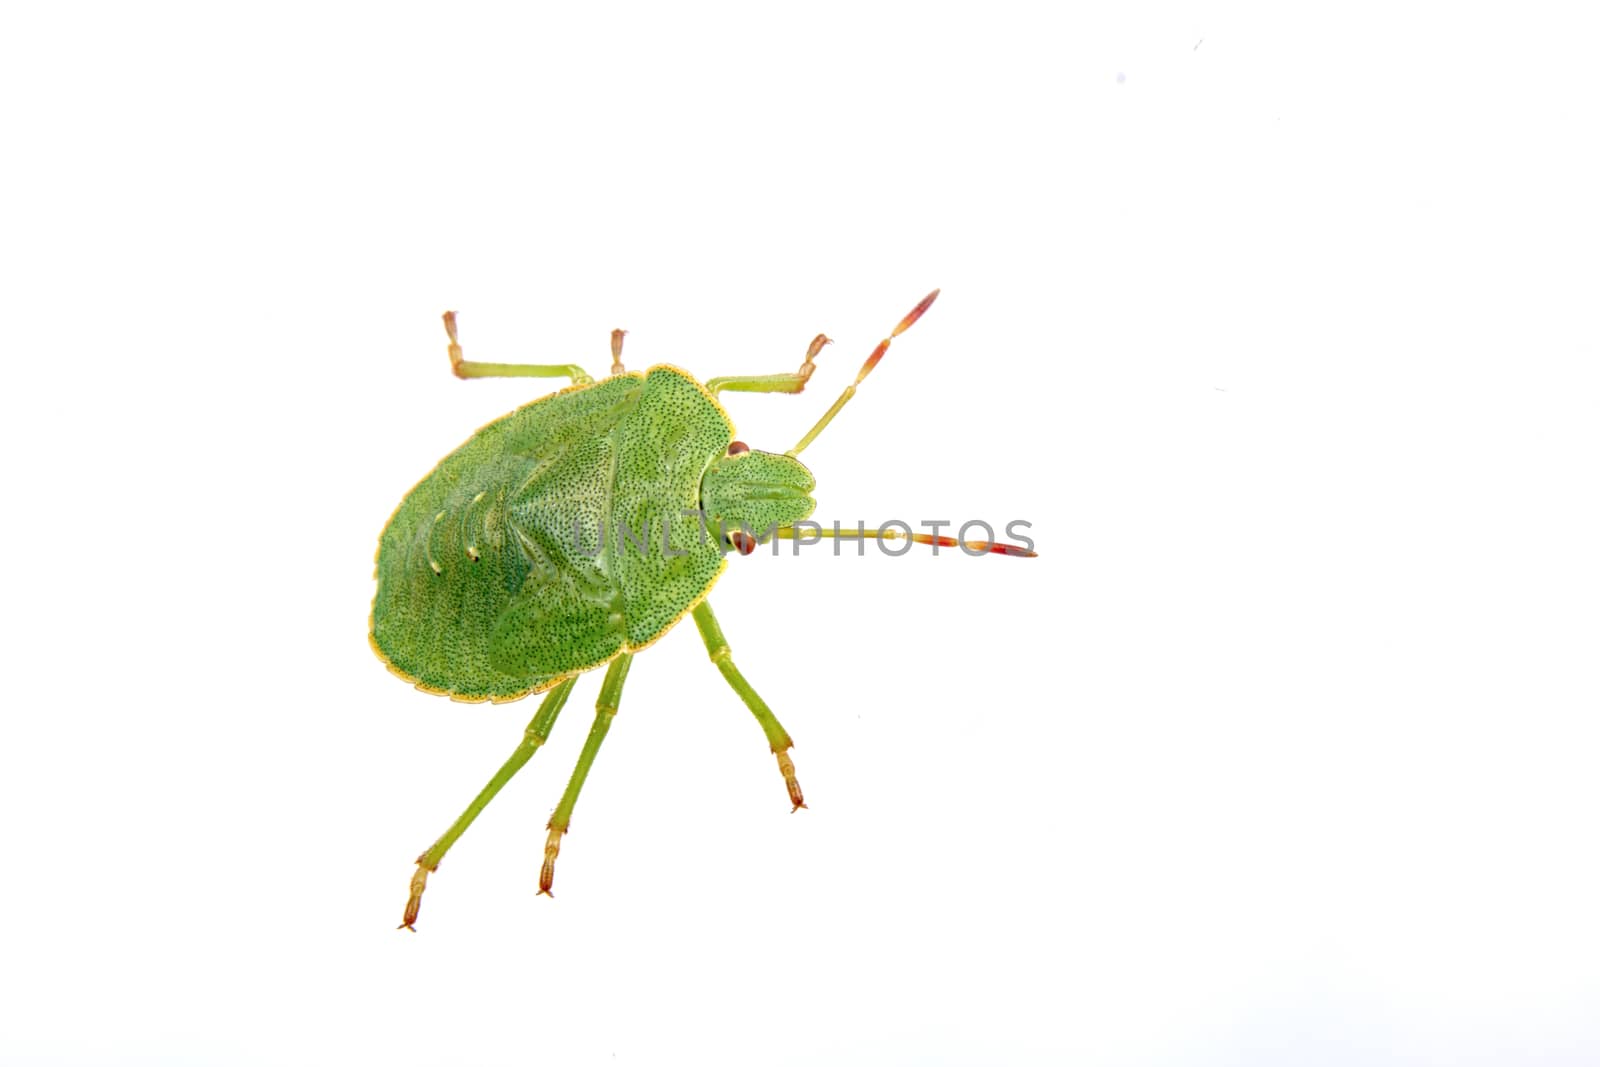 Green shield bug on a white background by neryx